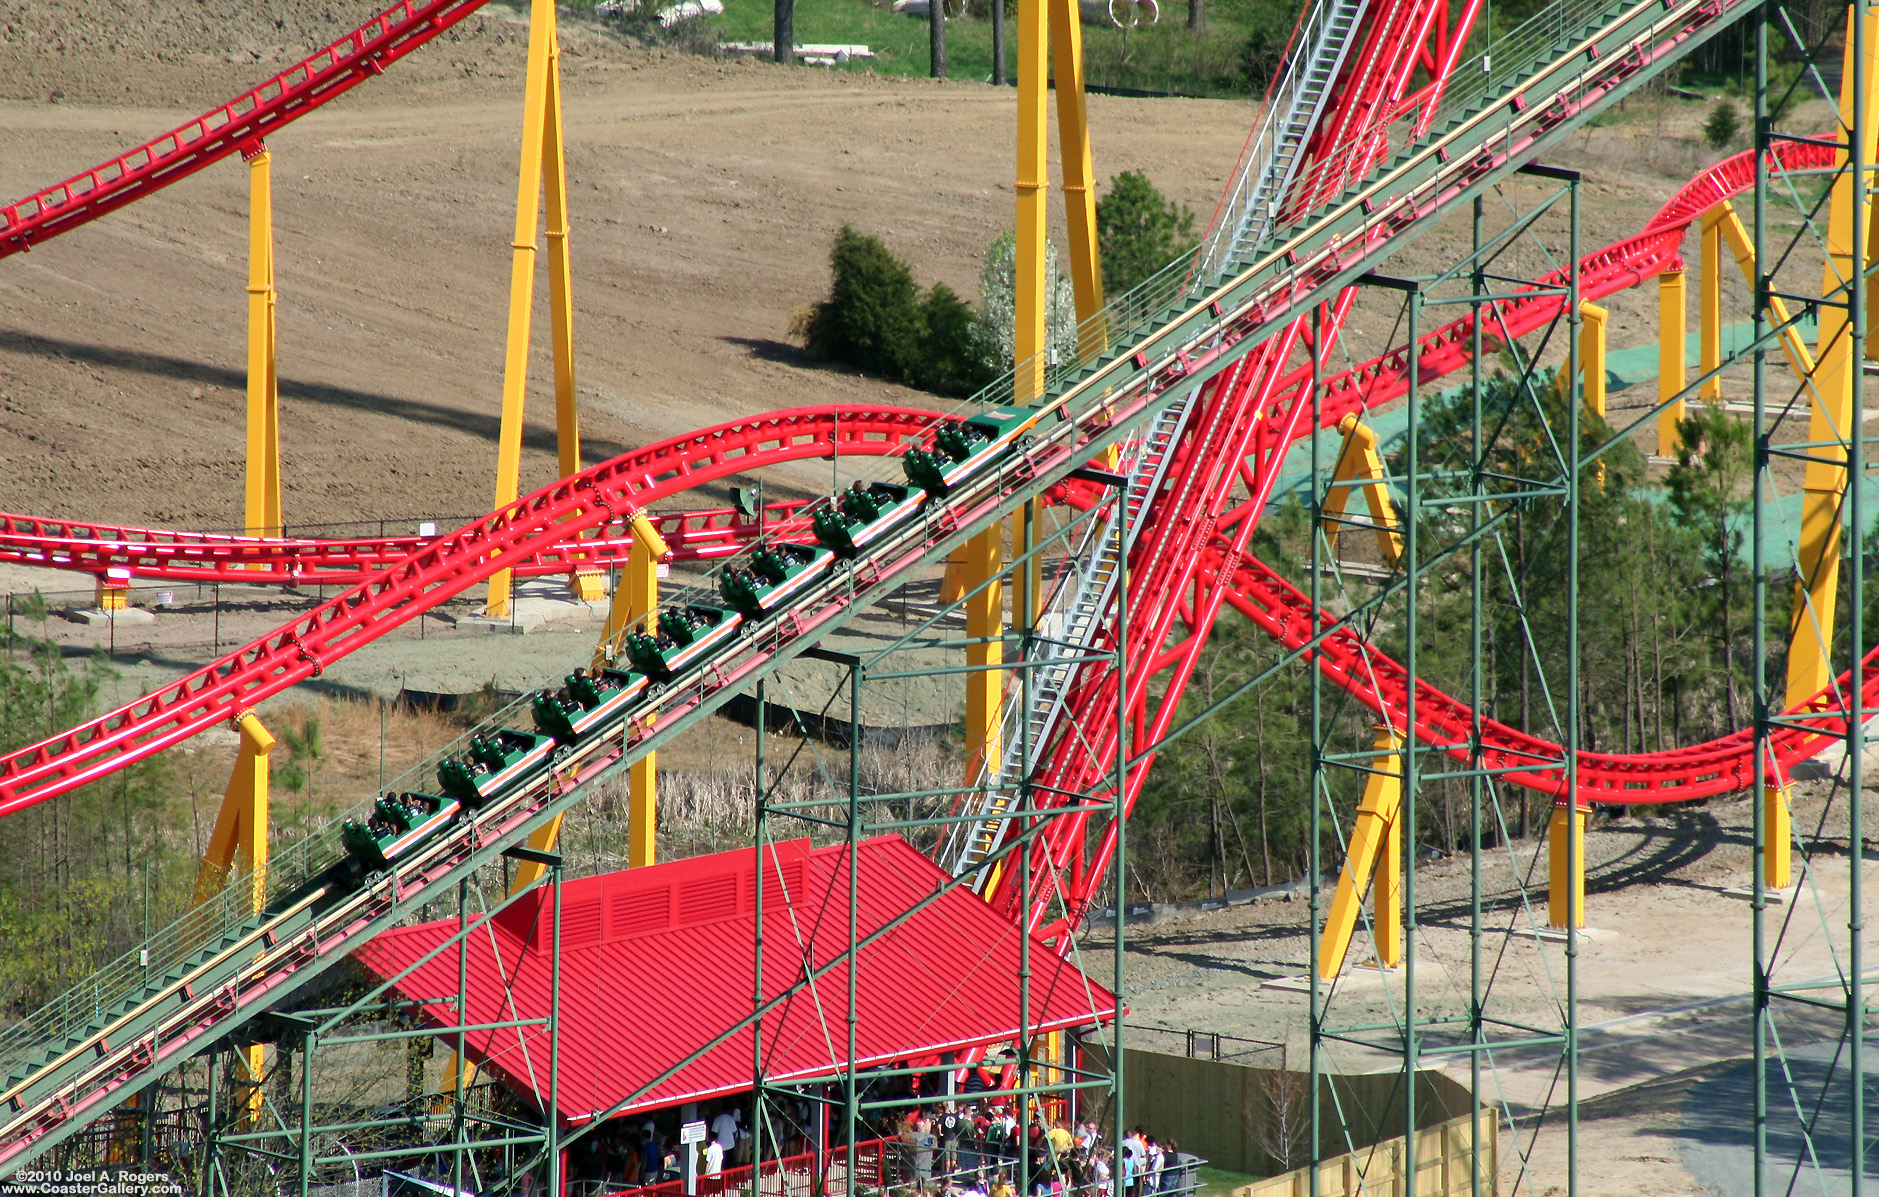 Anaconda and Intimidator roller coasters